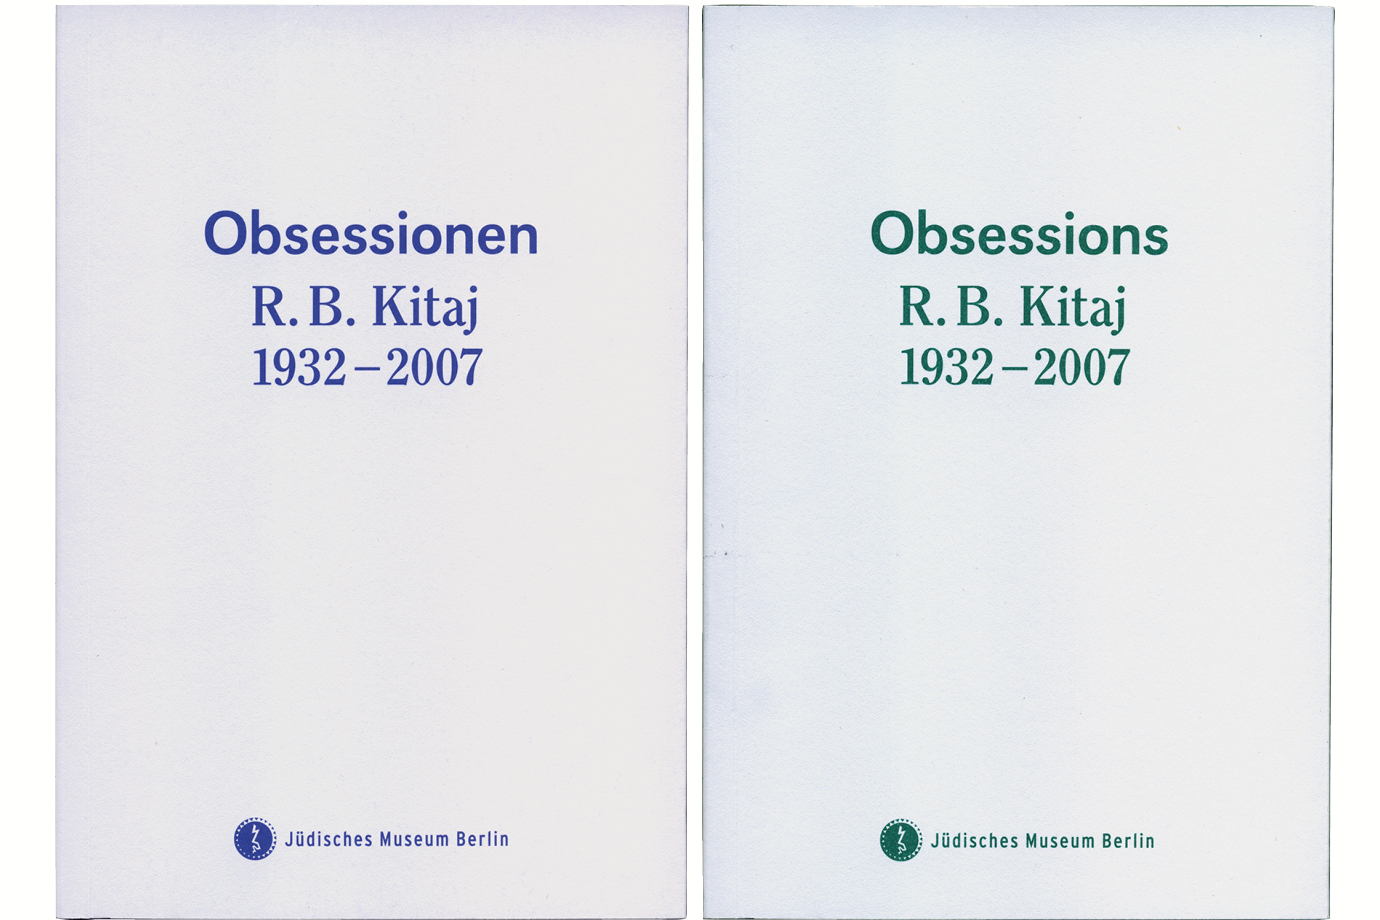 https://e-o-t.de/wordpress/wp-content/uploads/2017/06/eot-2012-Kitaj-Booklets-1.jpg